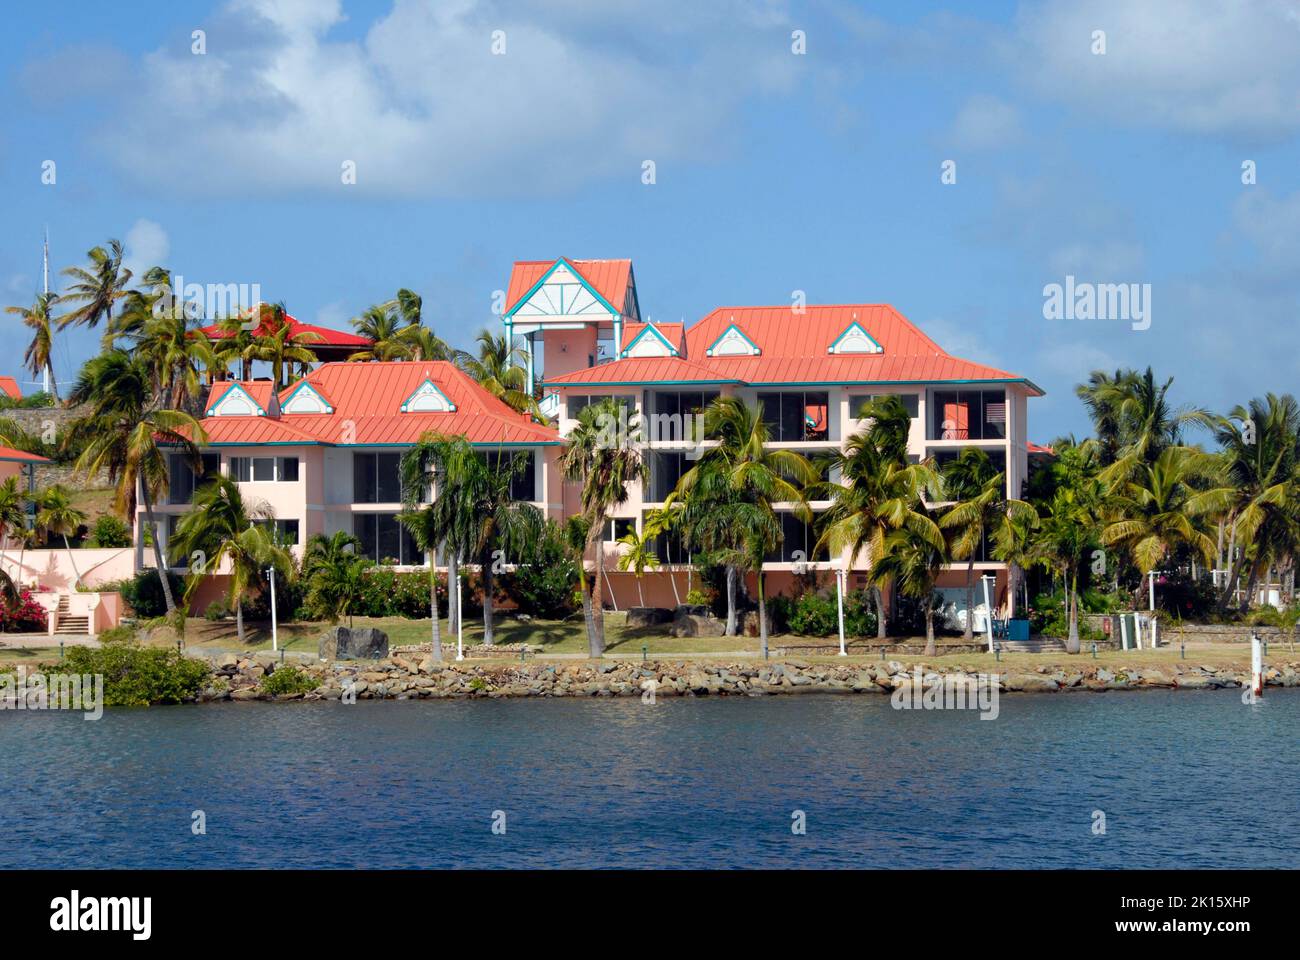 Am Wasser gelegene Gebäude an der Simpson Bay Lagoon, Sint Maarten, Karibik Stockfoto